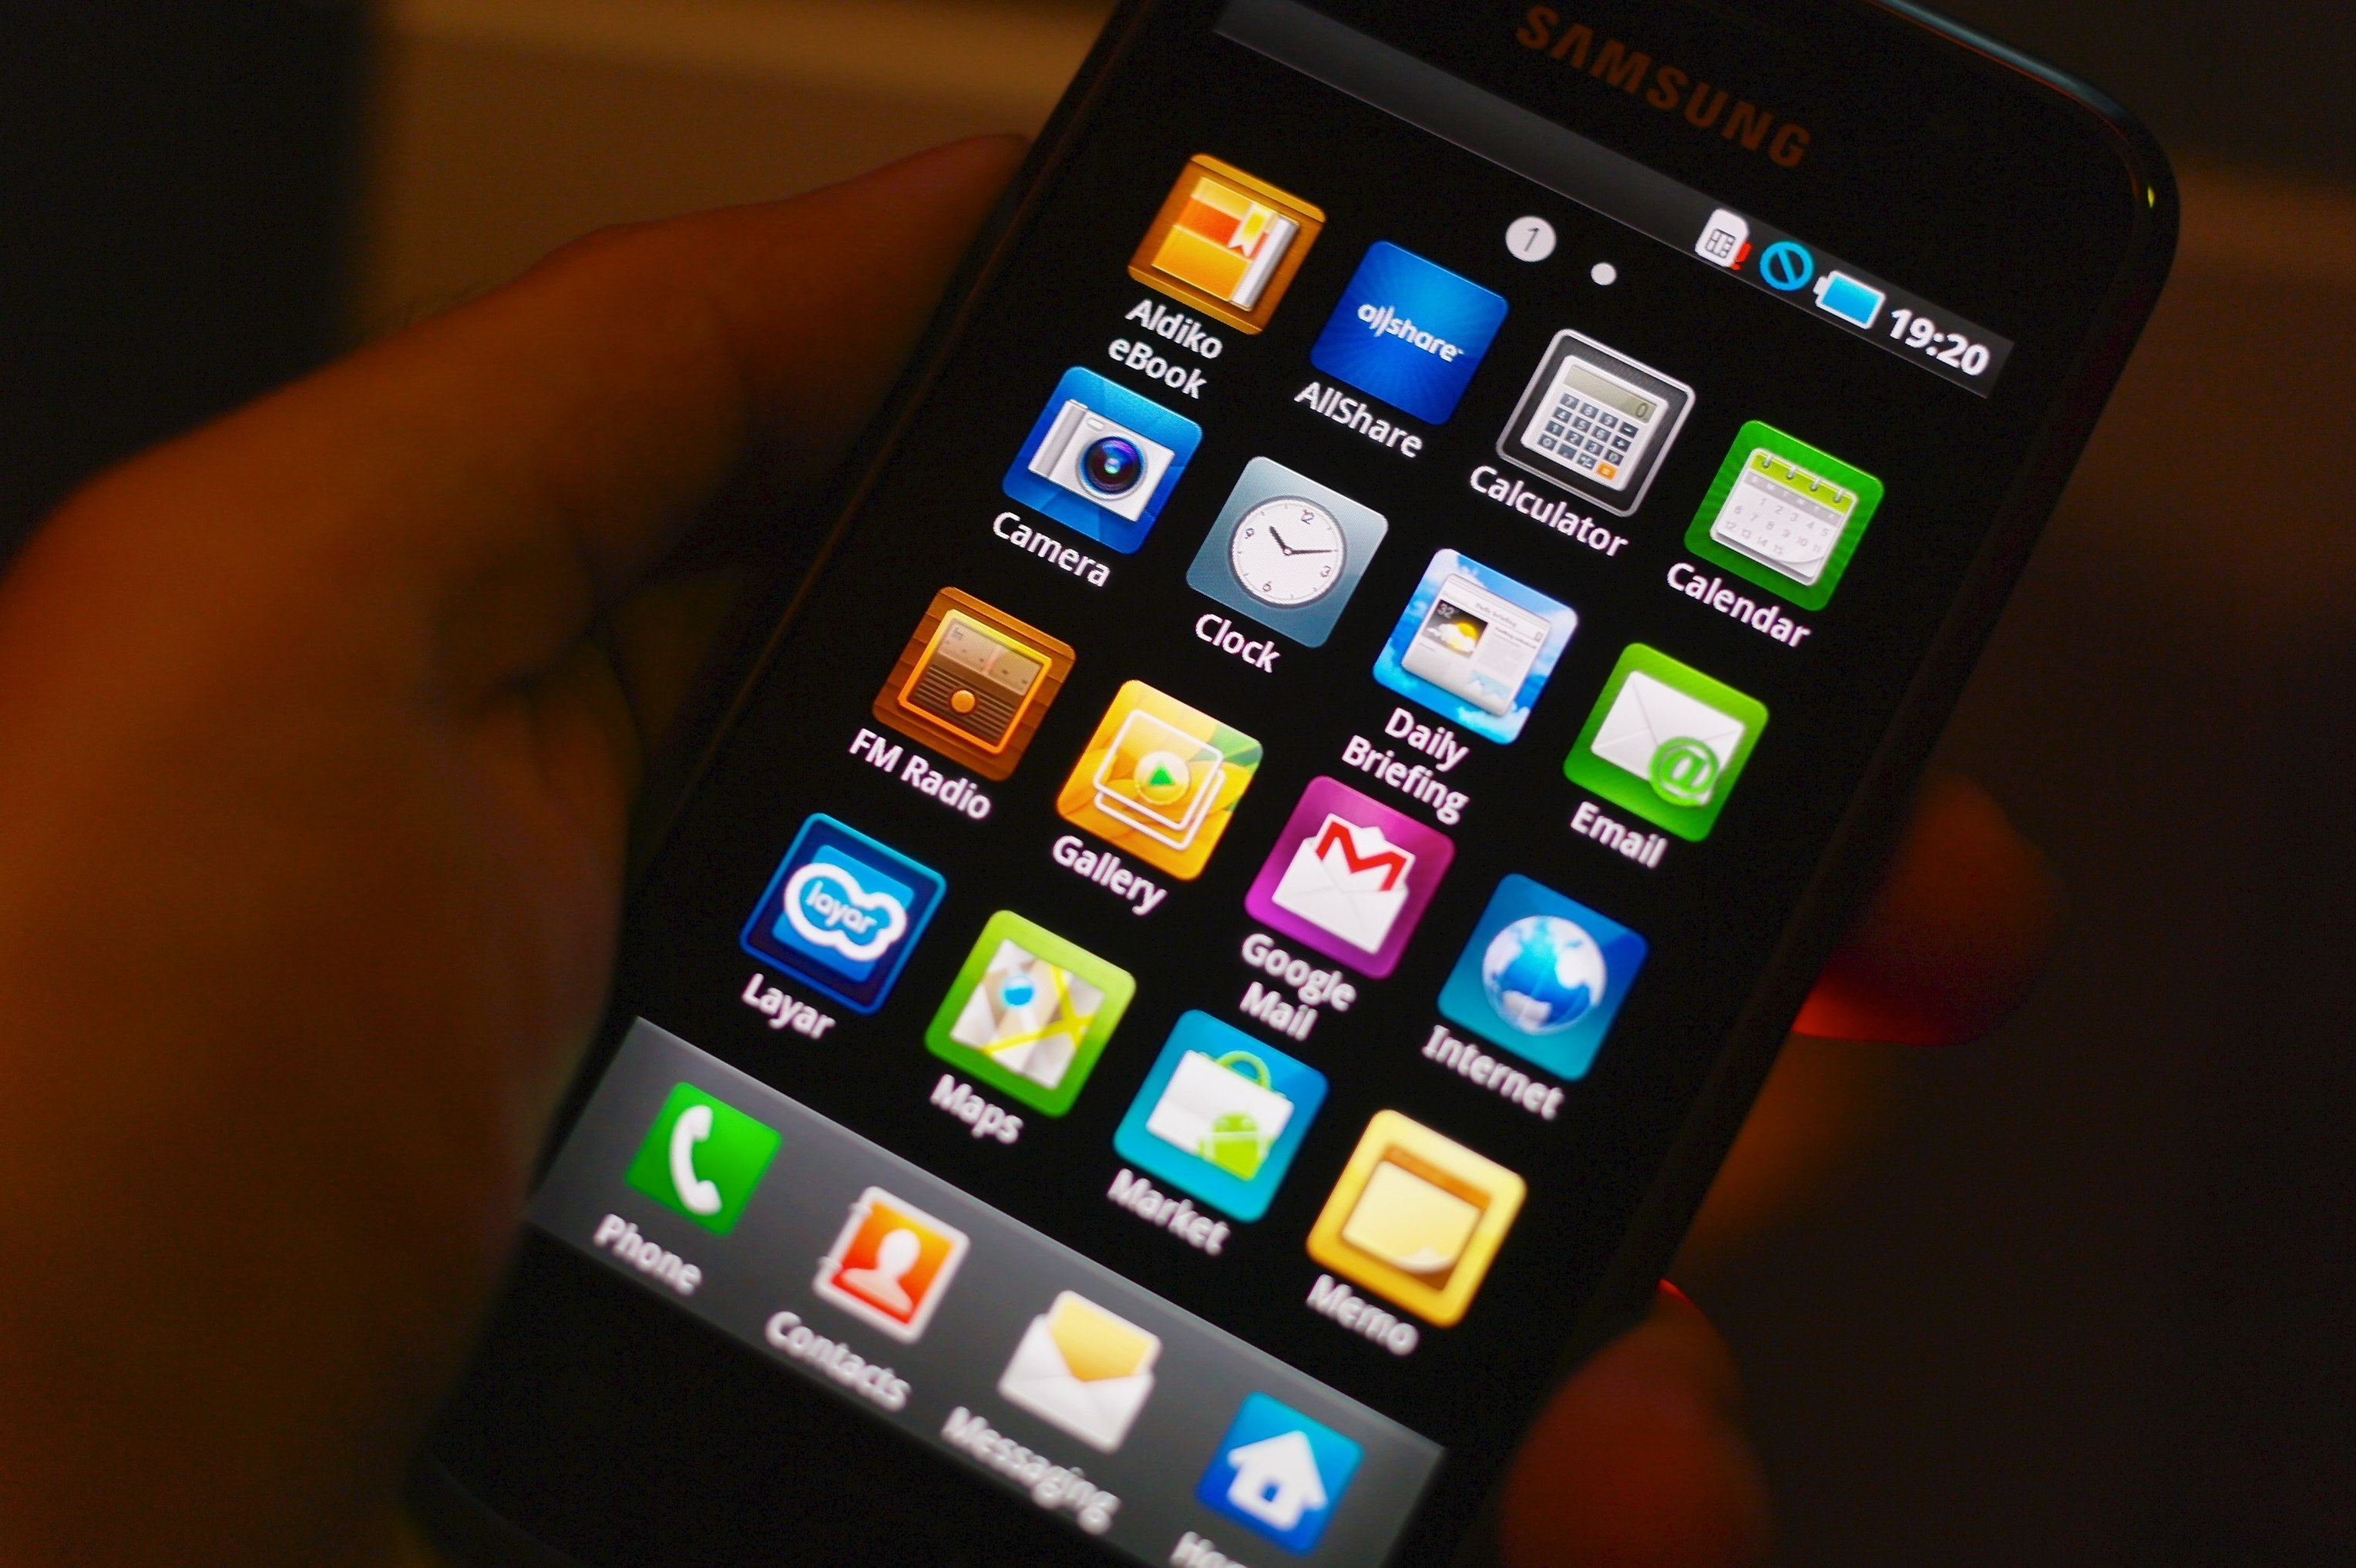 Samsung андроид 2.1. Преимущества телефона Samsung. Телефон самсунг андроид 2